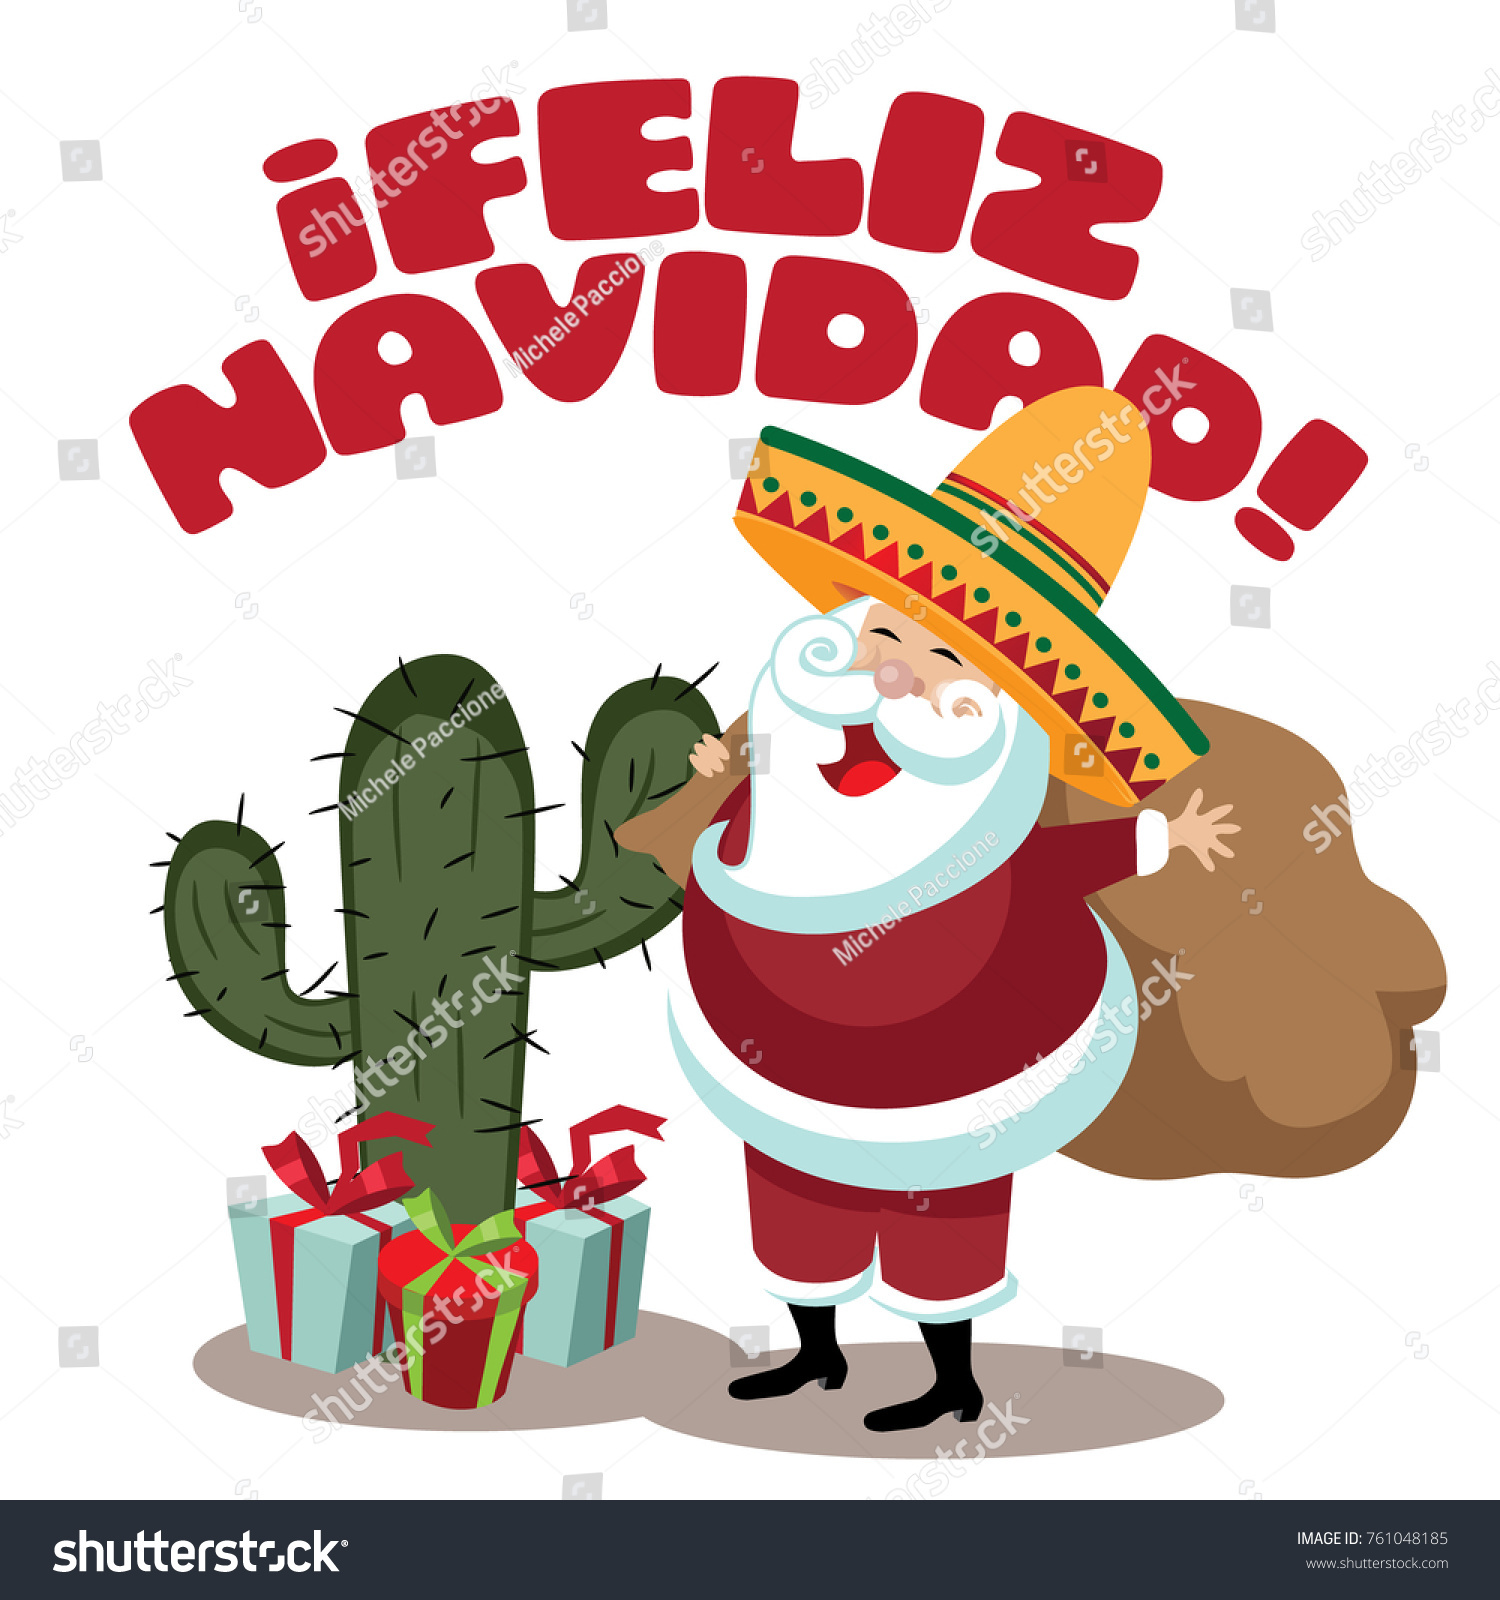 Feliz Navidad Merry Christmas Happy Holidays illustration with cartoon cactus and Santa Claus wearing